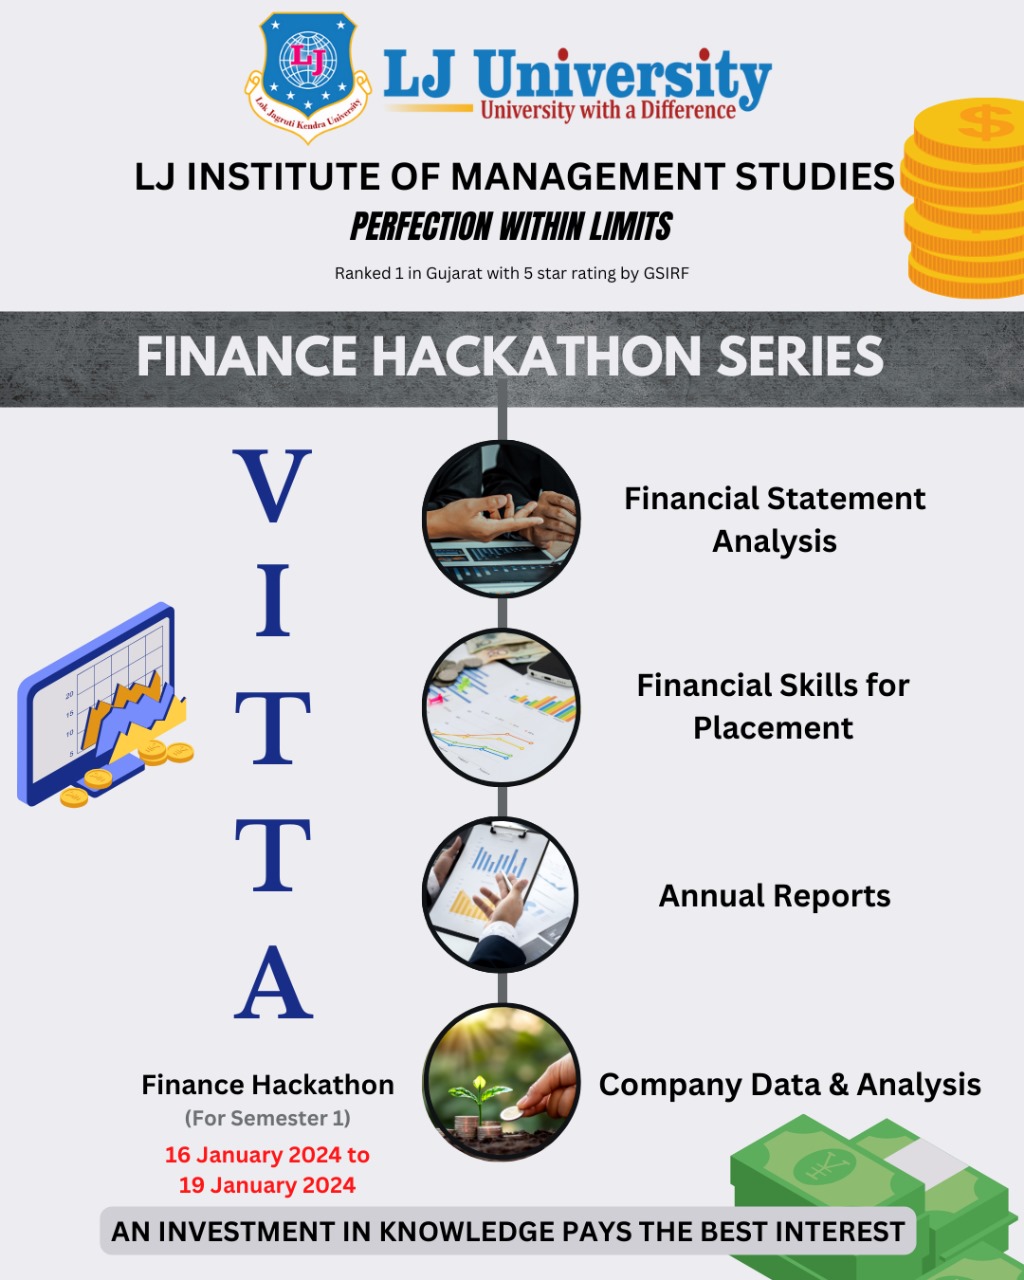 Vitta - A Finance Hackathon